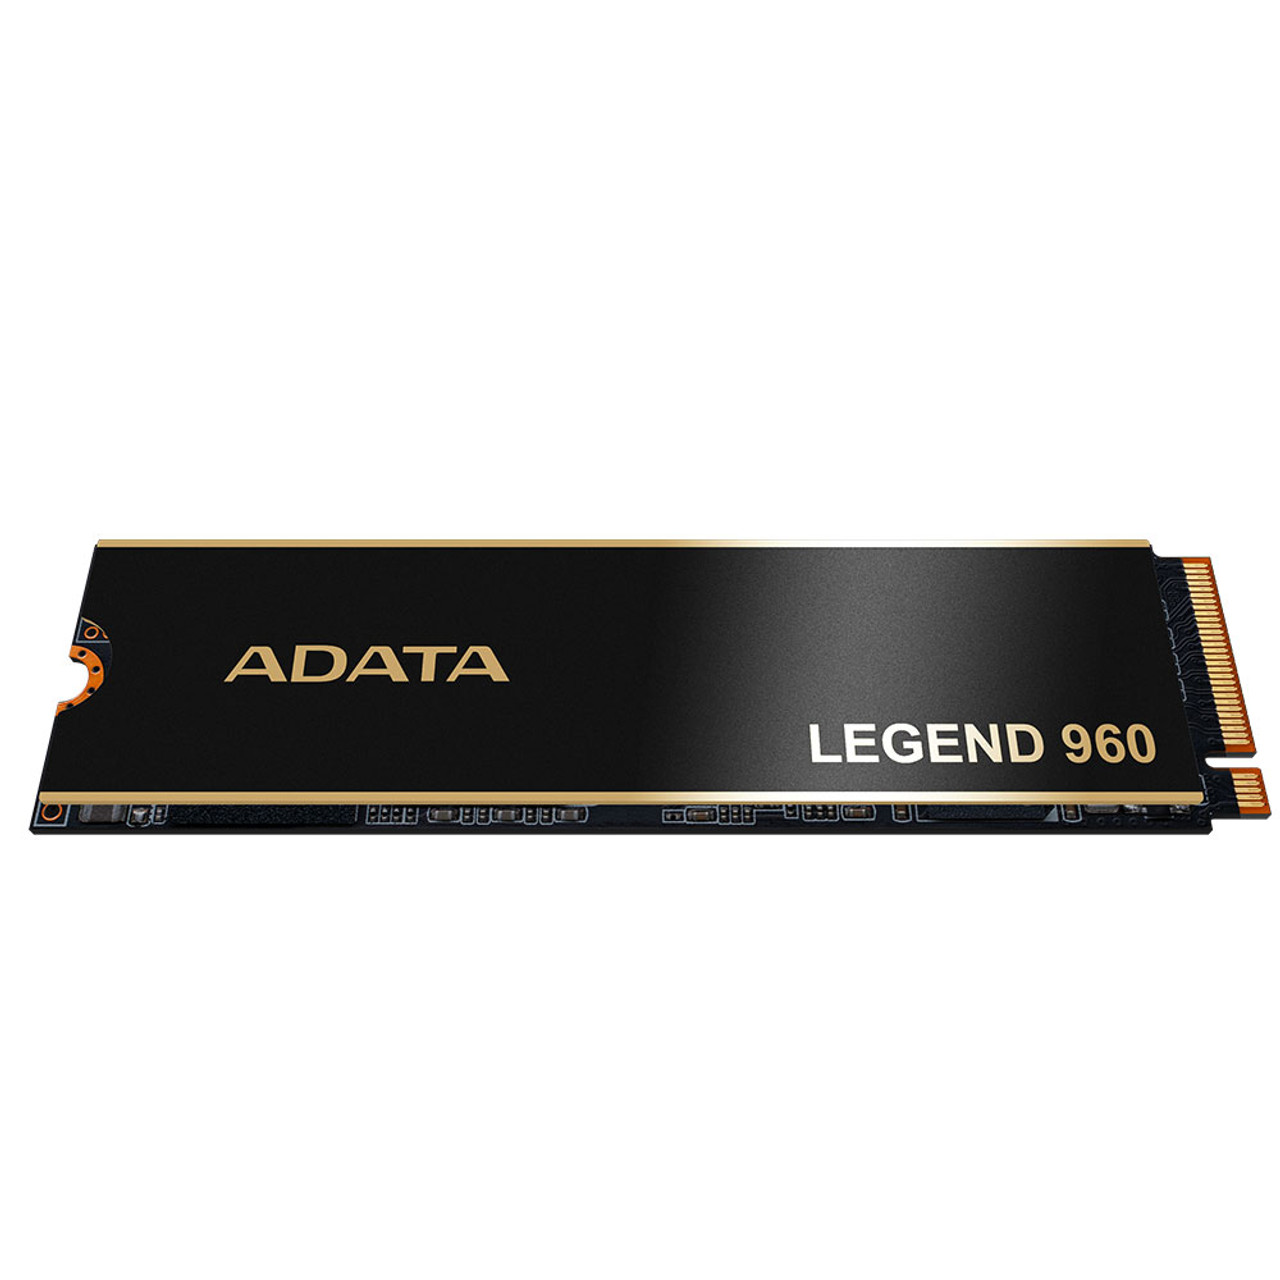 insert empty porcelain ADATA LEGEND 960 2TB SSD GEN4x4 M.2 2280 Internal Solid State Drive | PS5  Compatible - SMI SM2264 3D NAND | Up to 7400 MBps - Black/Gold 1PK | 1560  TBW - ADATA